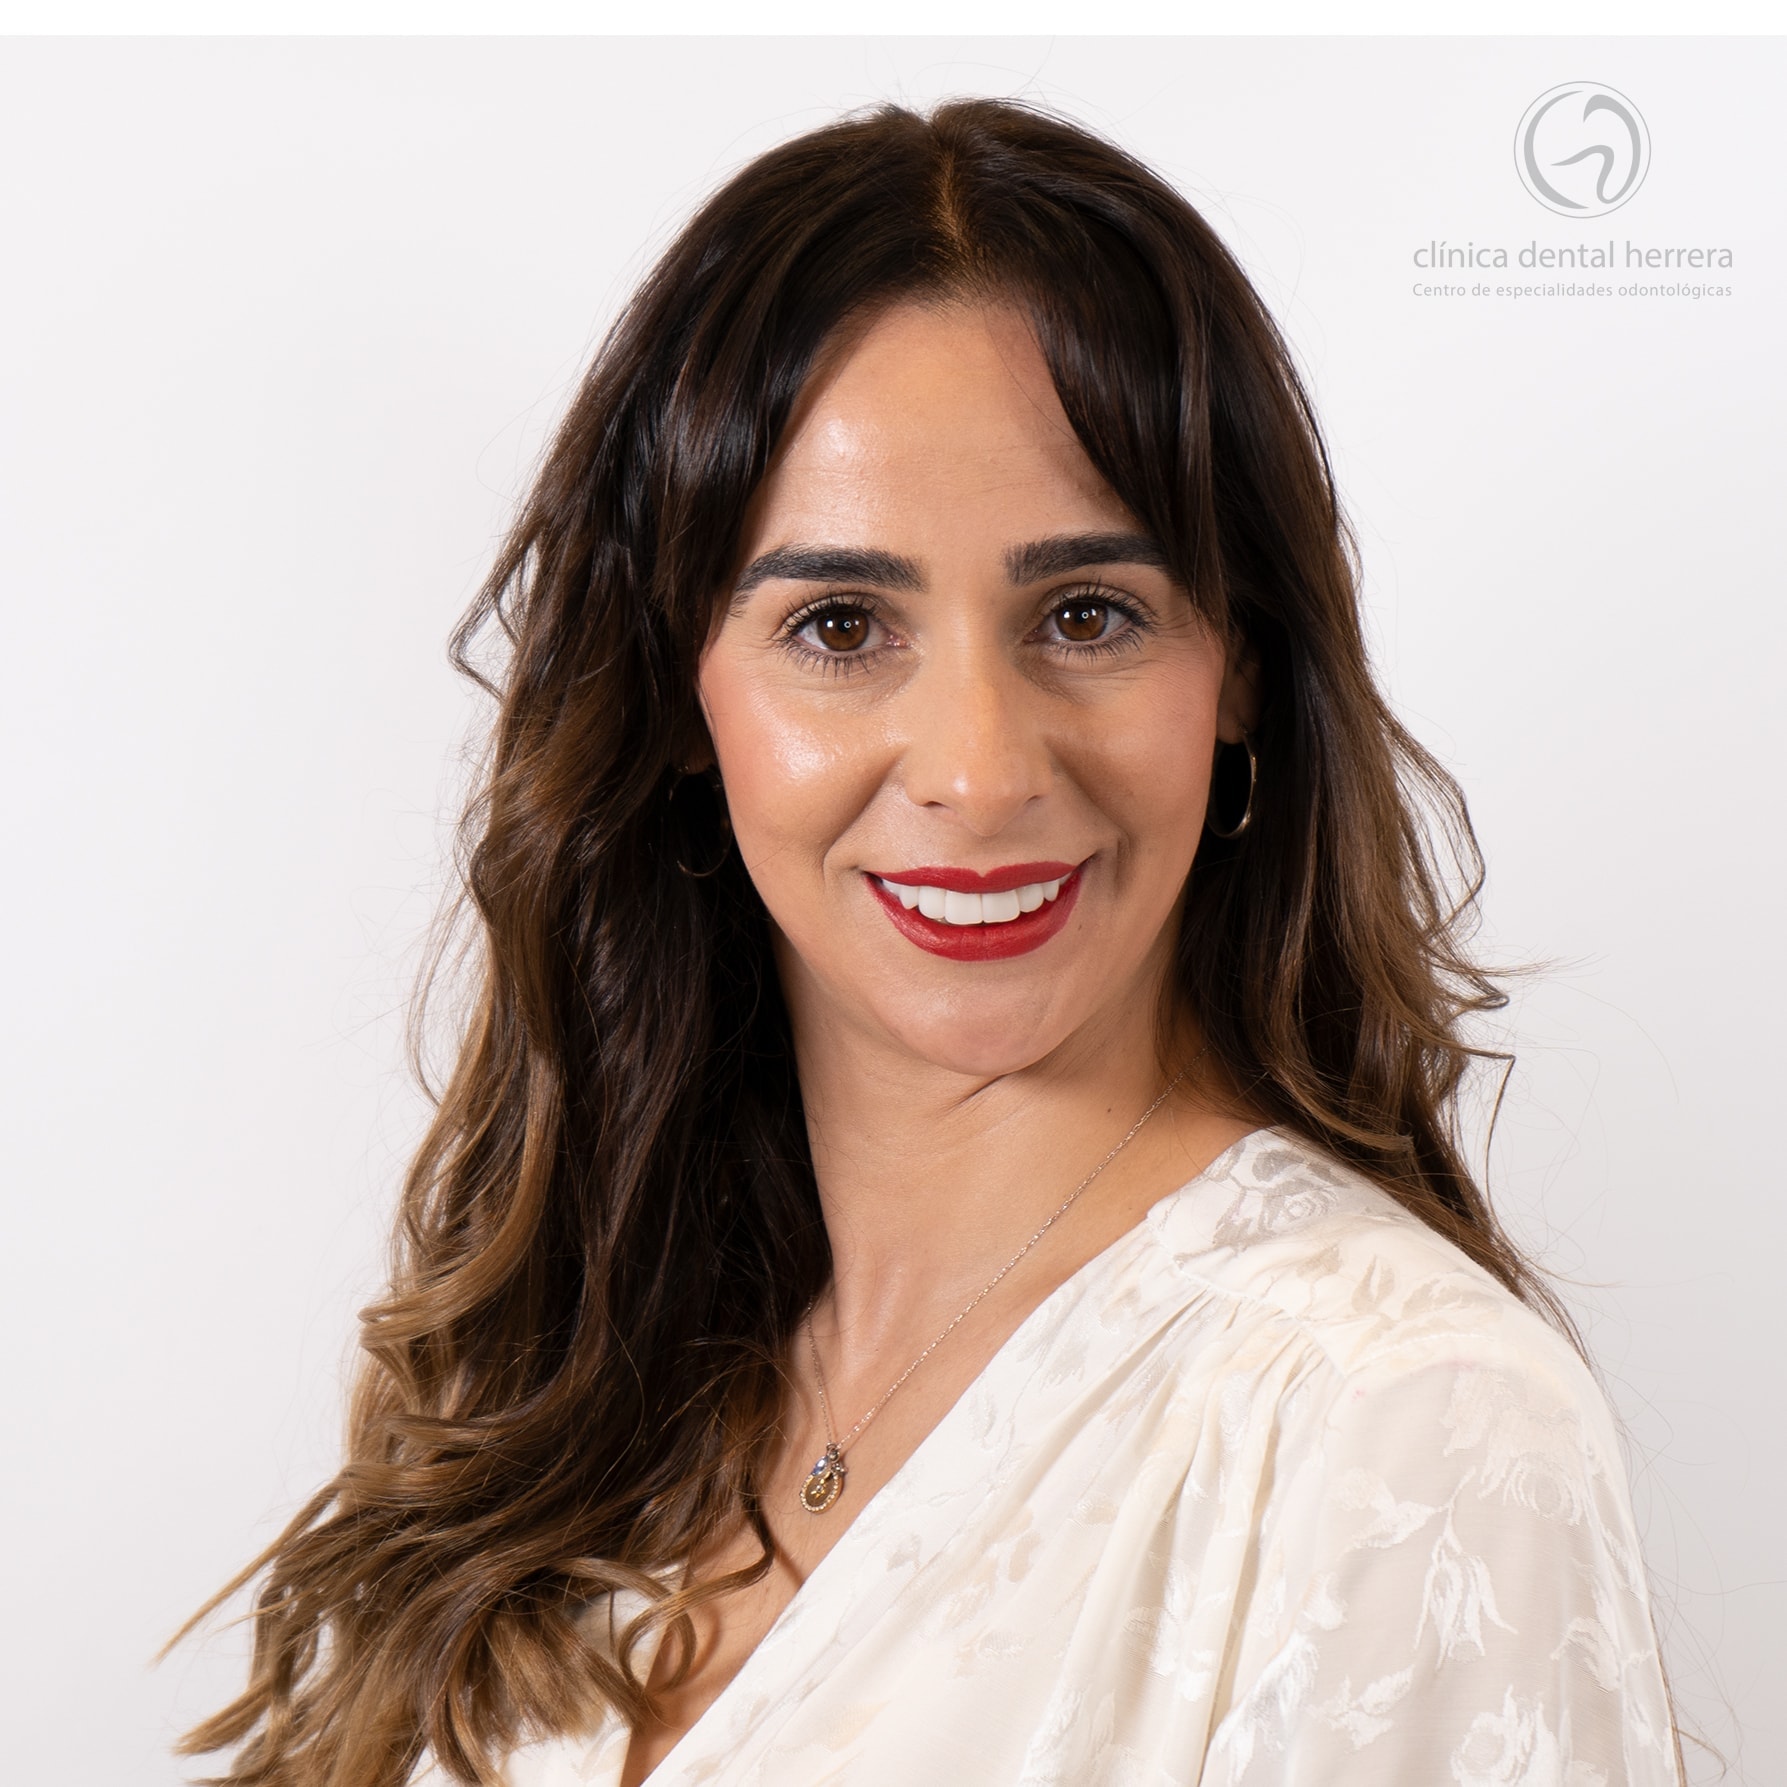 Inmaculada García-Chicano. Orthodontie, Implants et Facettes Dentaires 1